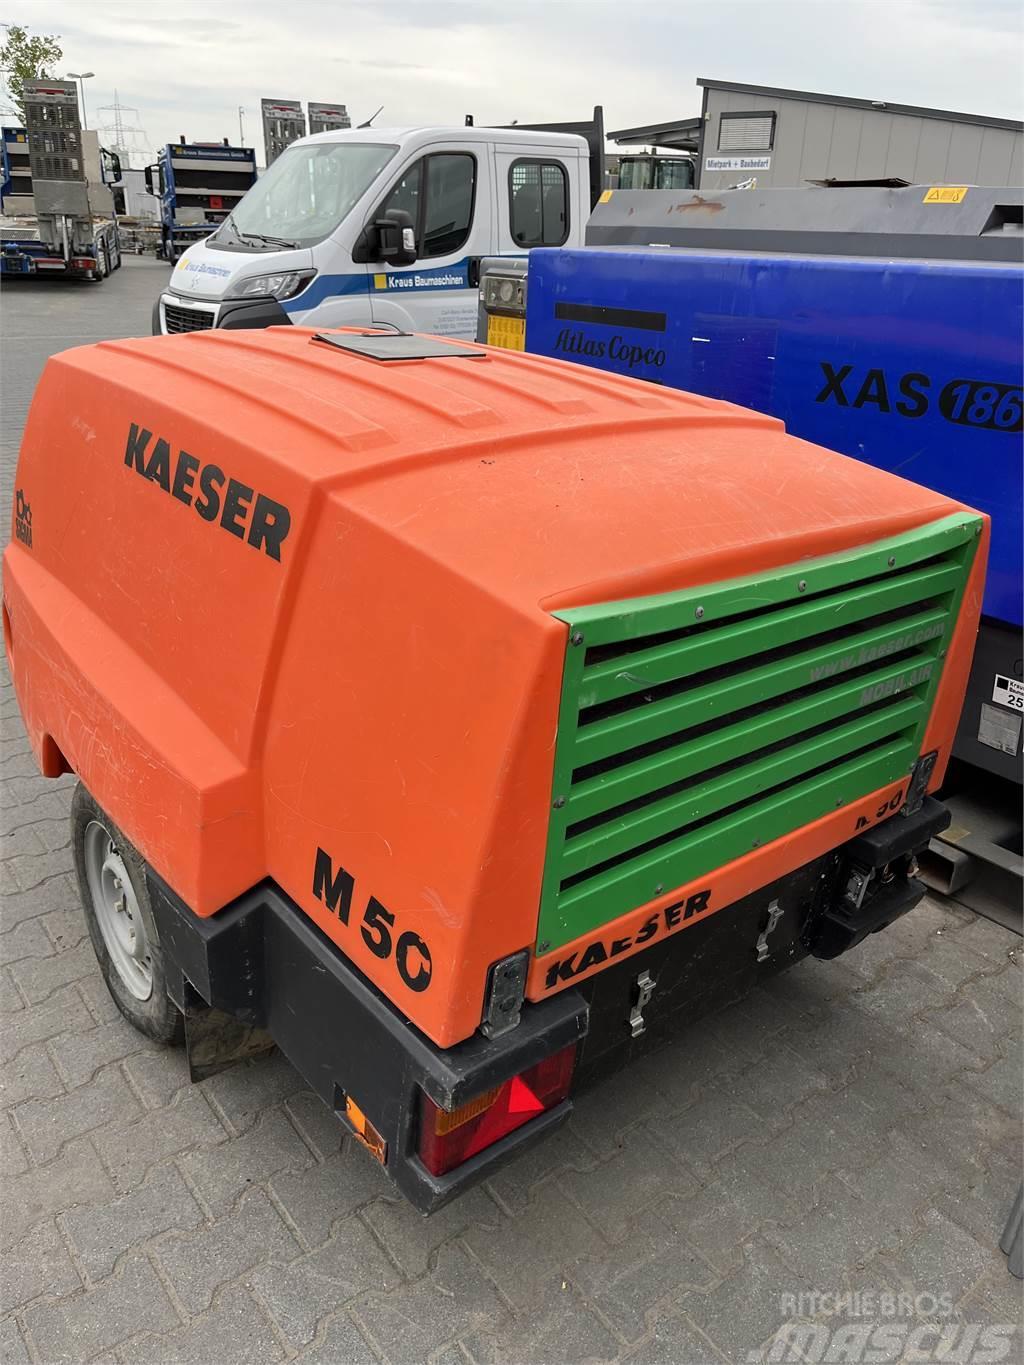 Kaeser M 50 Compressors